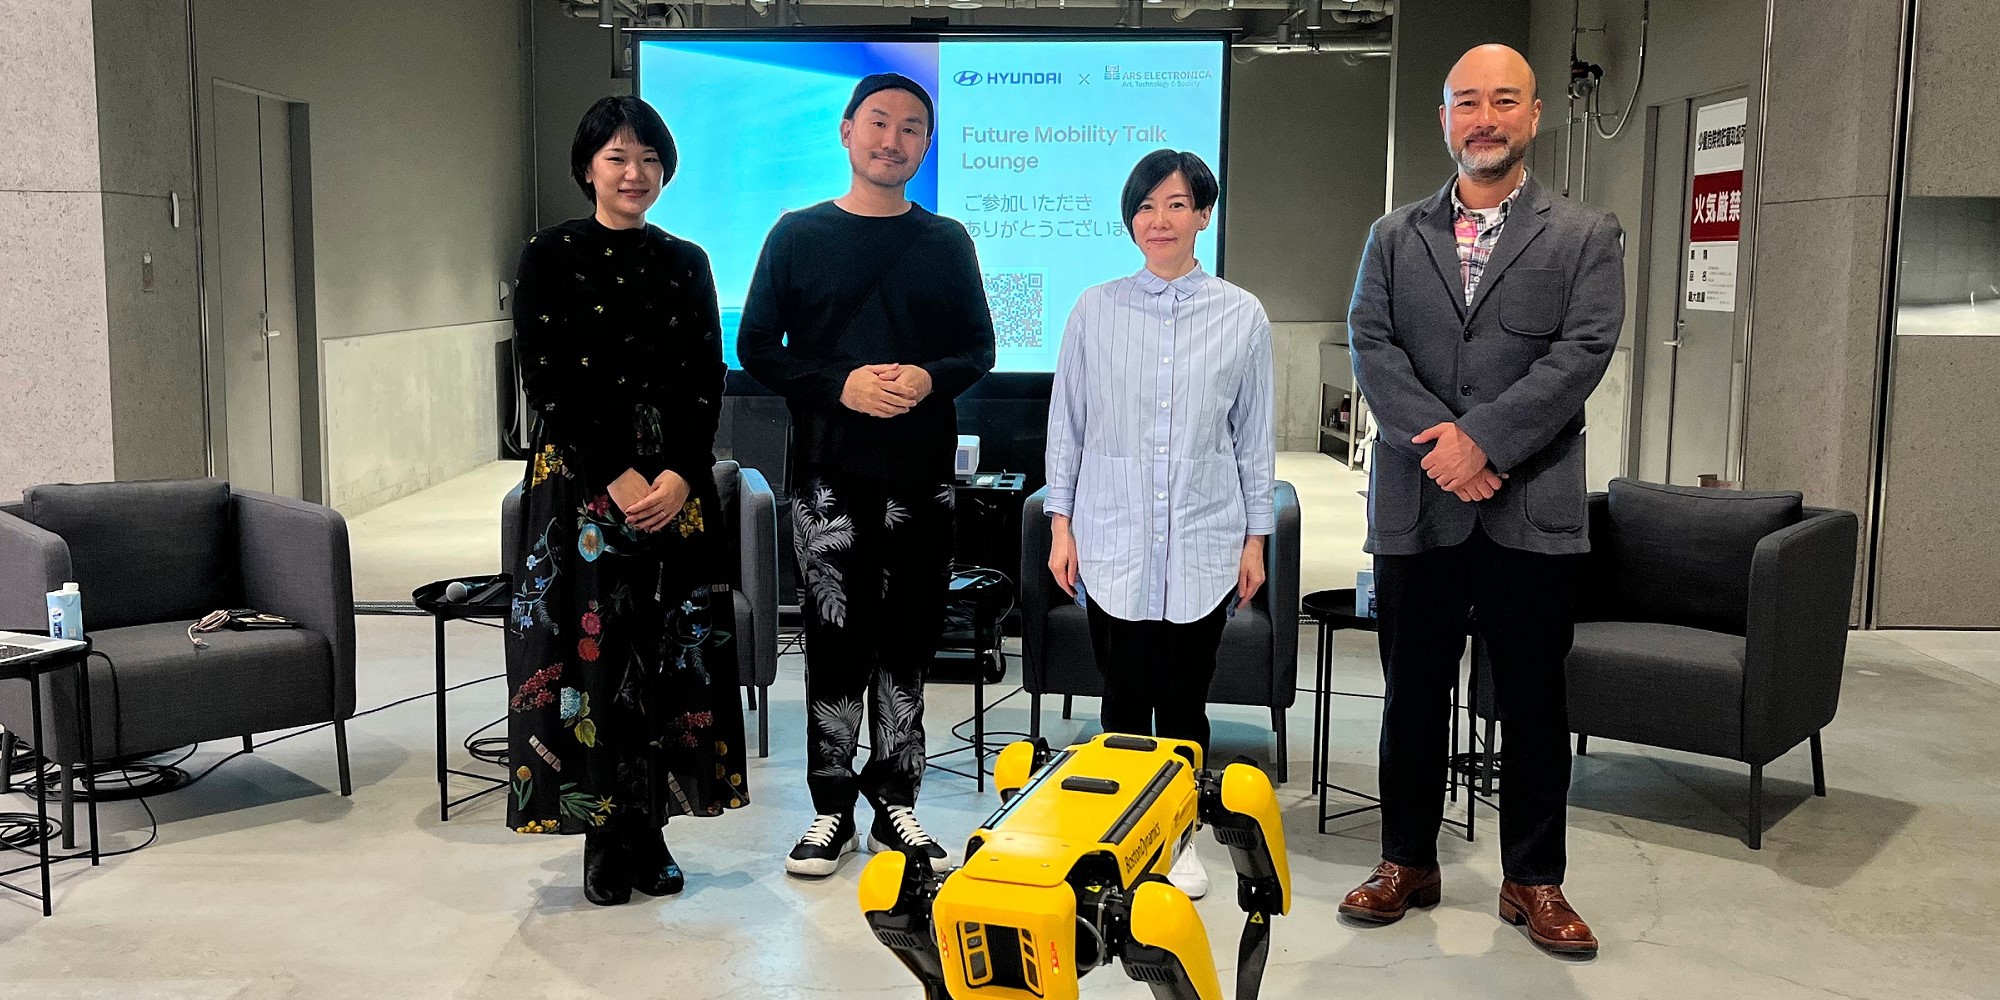 Diskussionsrunde "What will mobility of the future look like?” mit Hidemi Ichinose (Hyundai), Hideaki Ogawa und Kyoko Kunoh (Ars Electronica) sowie Takao Urabe (Hyundai) (v.l.n.r.).